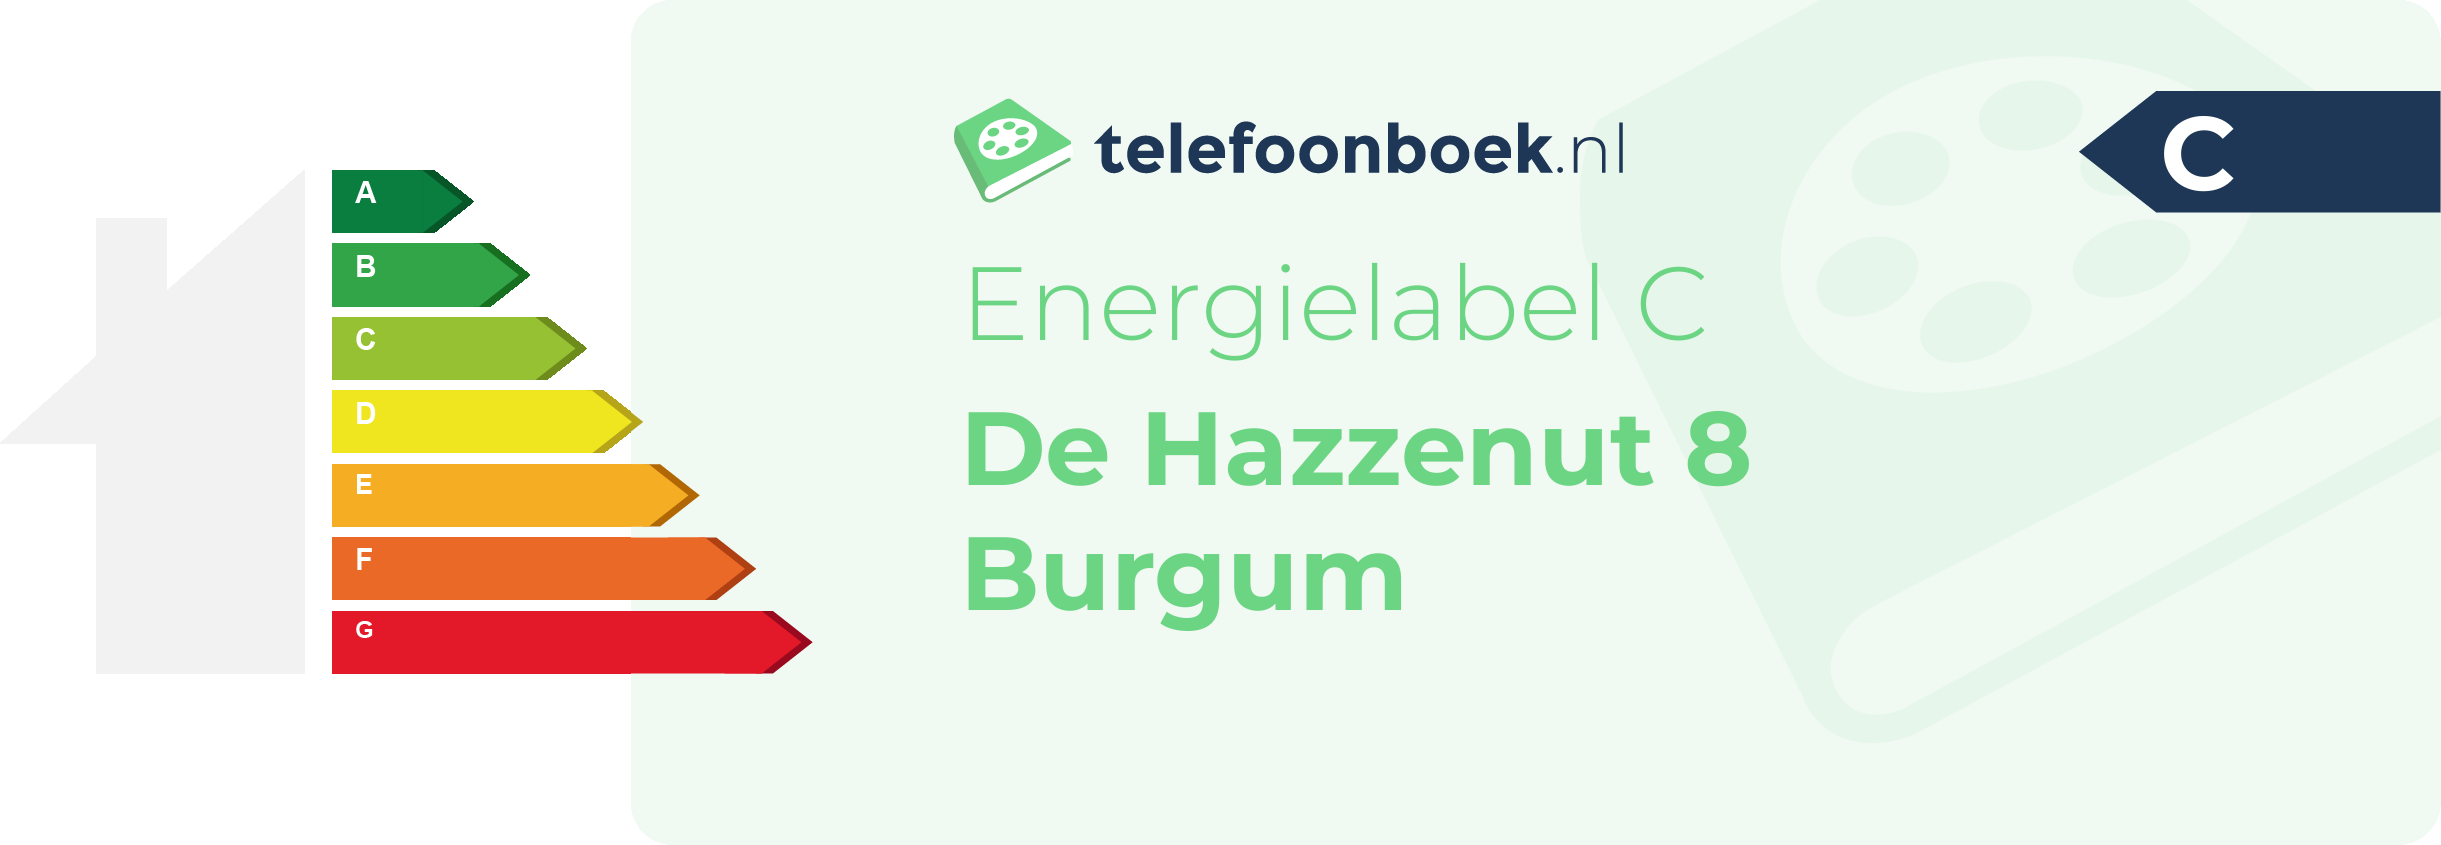 Energielabel De Hazzenut 8 Burgum